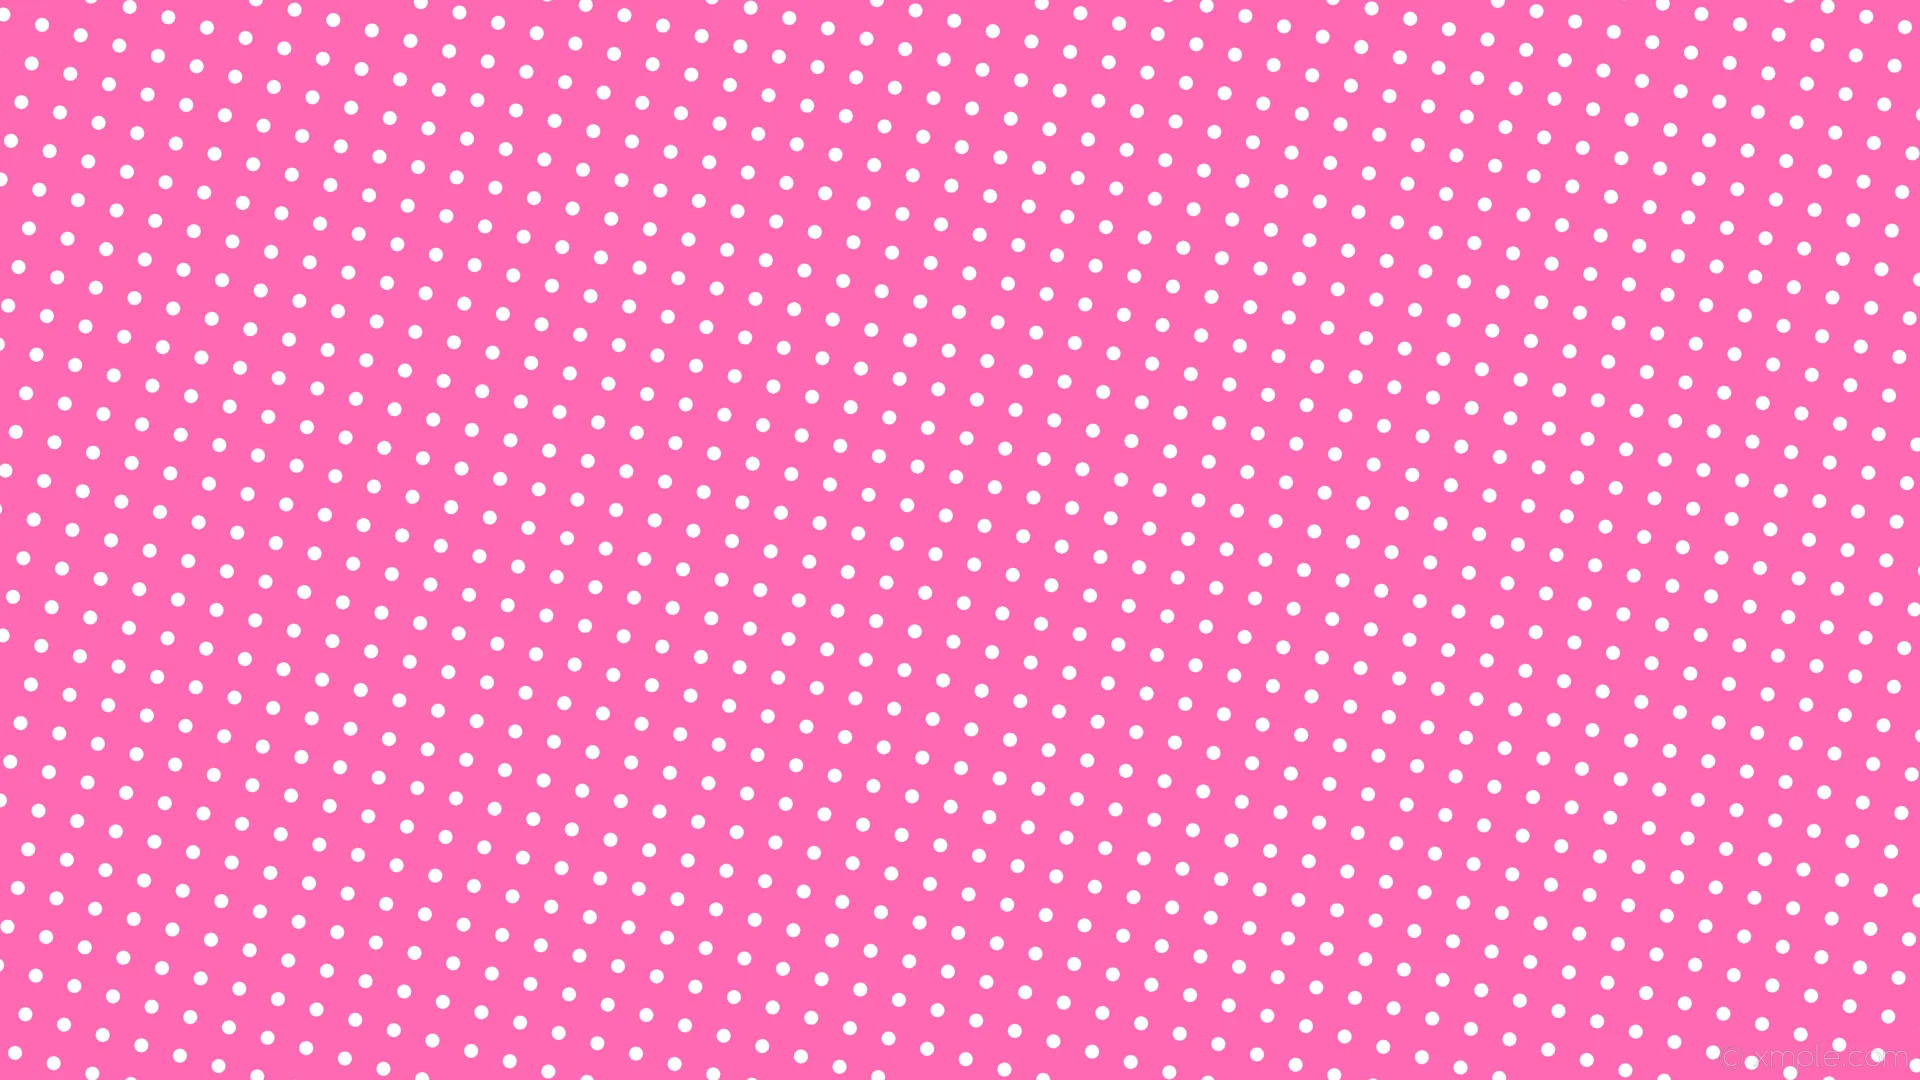 Wallpaper polka dots spots pink white hot pink #ff69b4 #ffffff 165 14px 40px